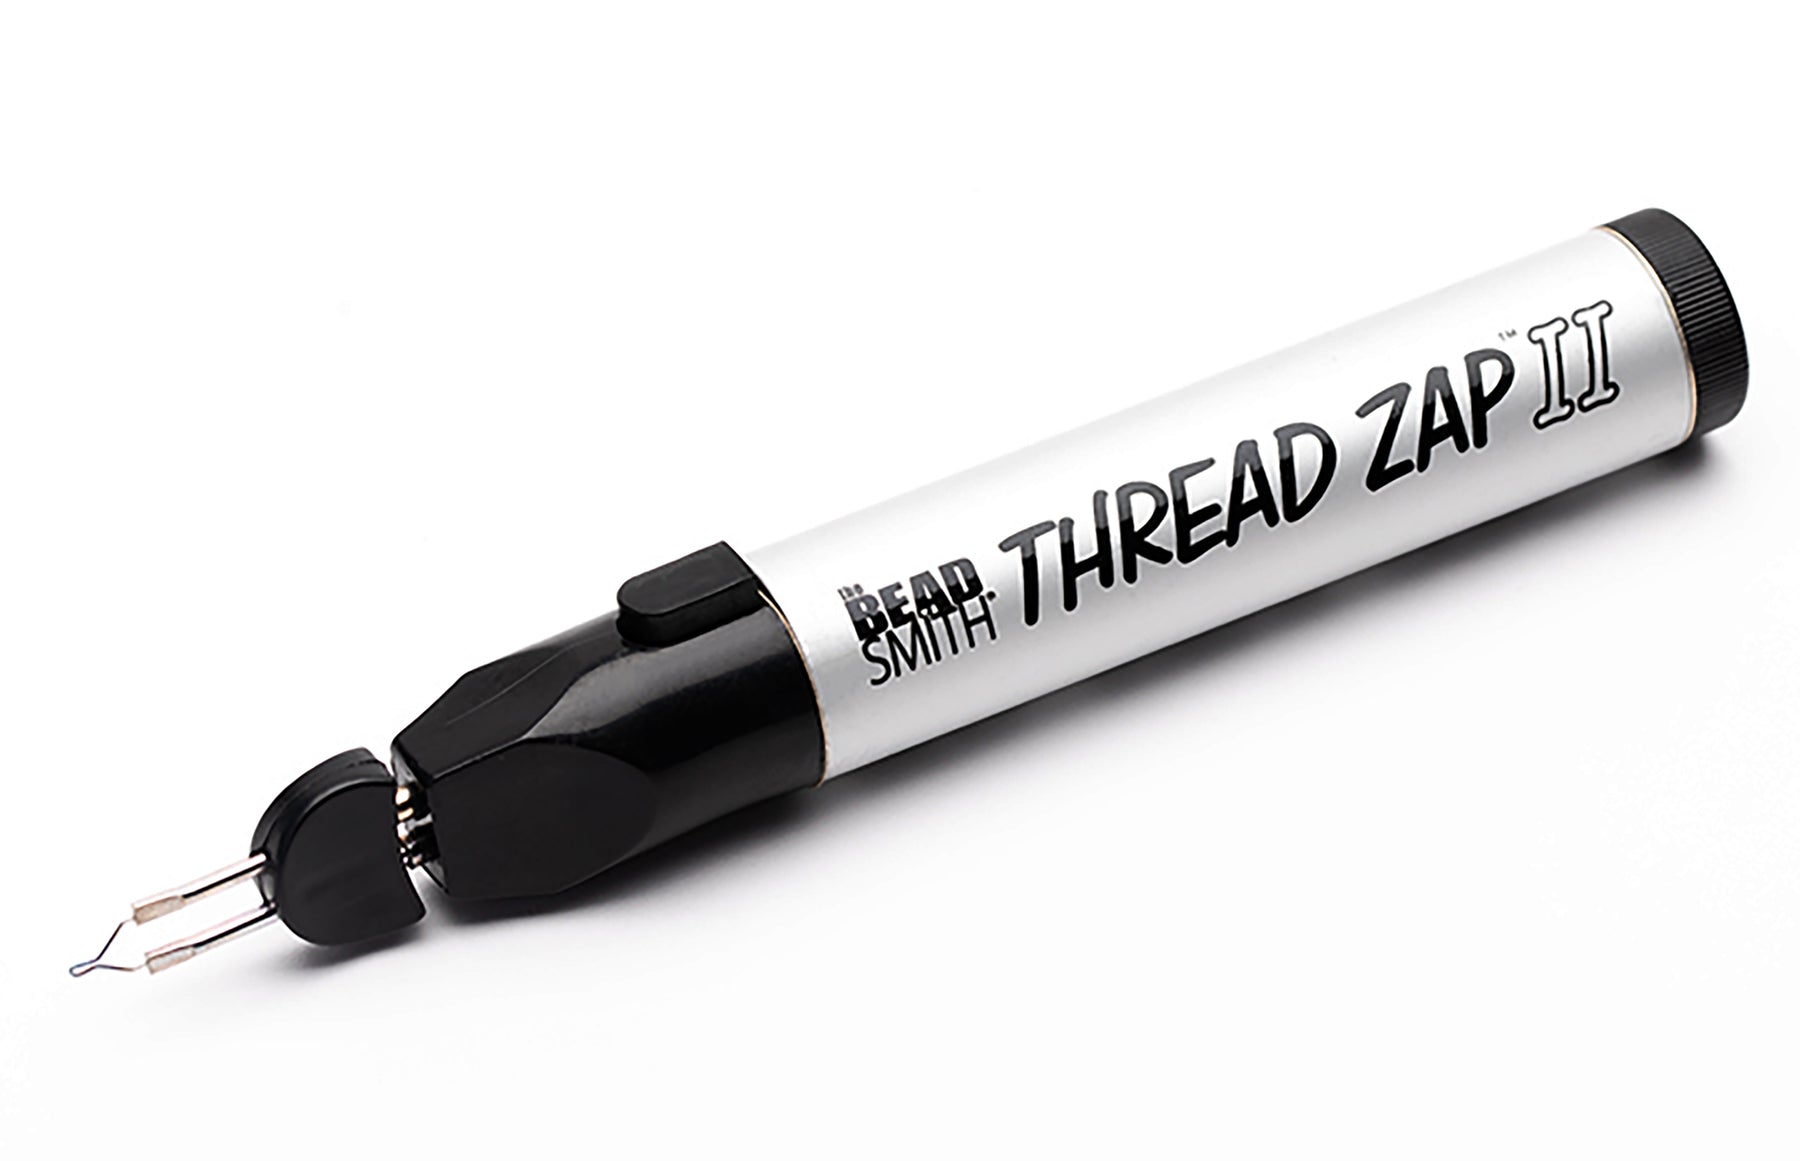 Thread Zap 2